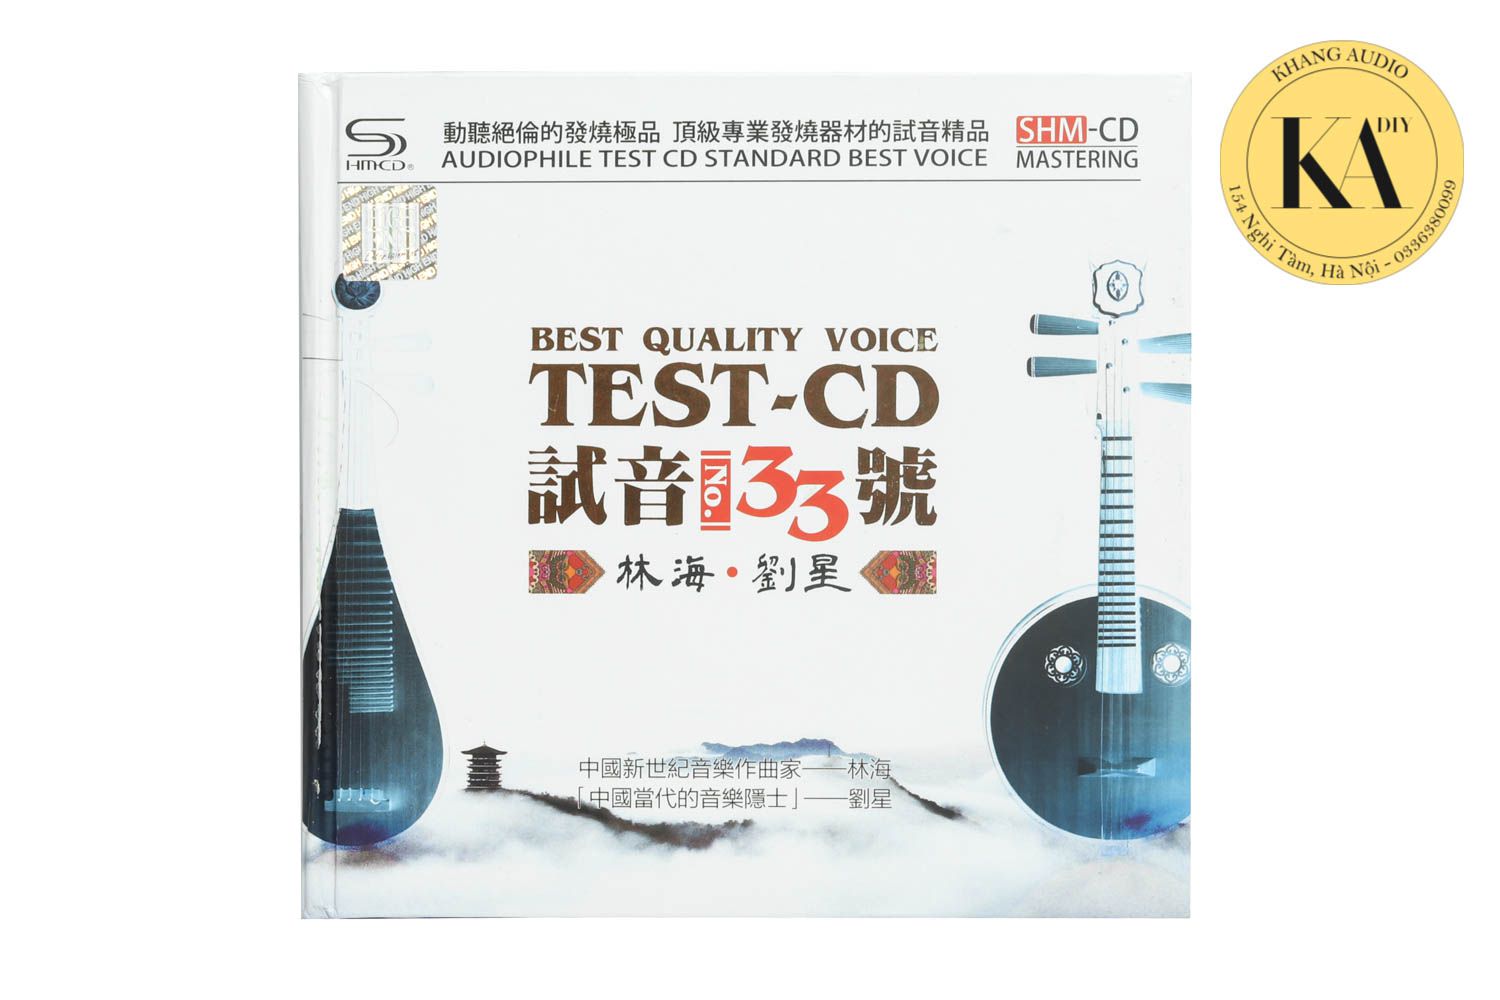 Test CD No.33 Khang Audio 0336380099